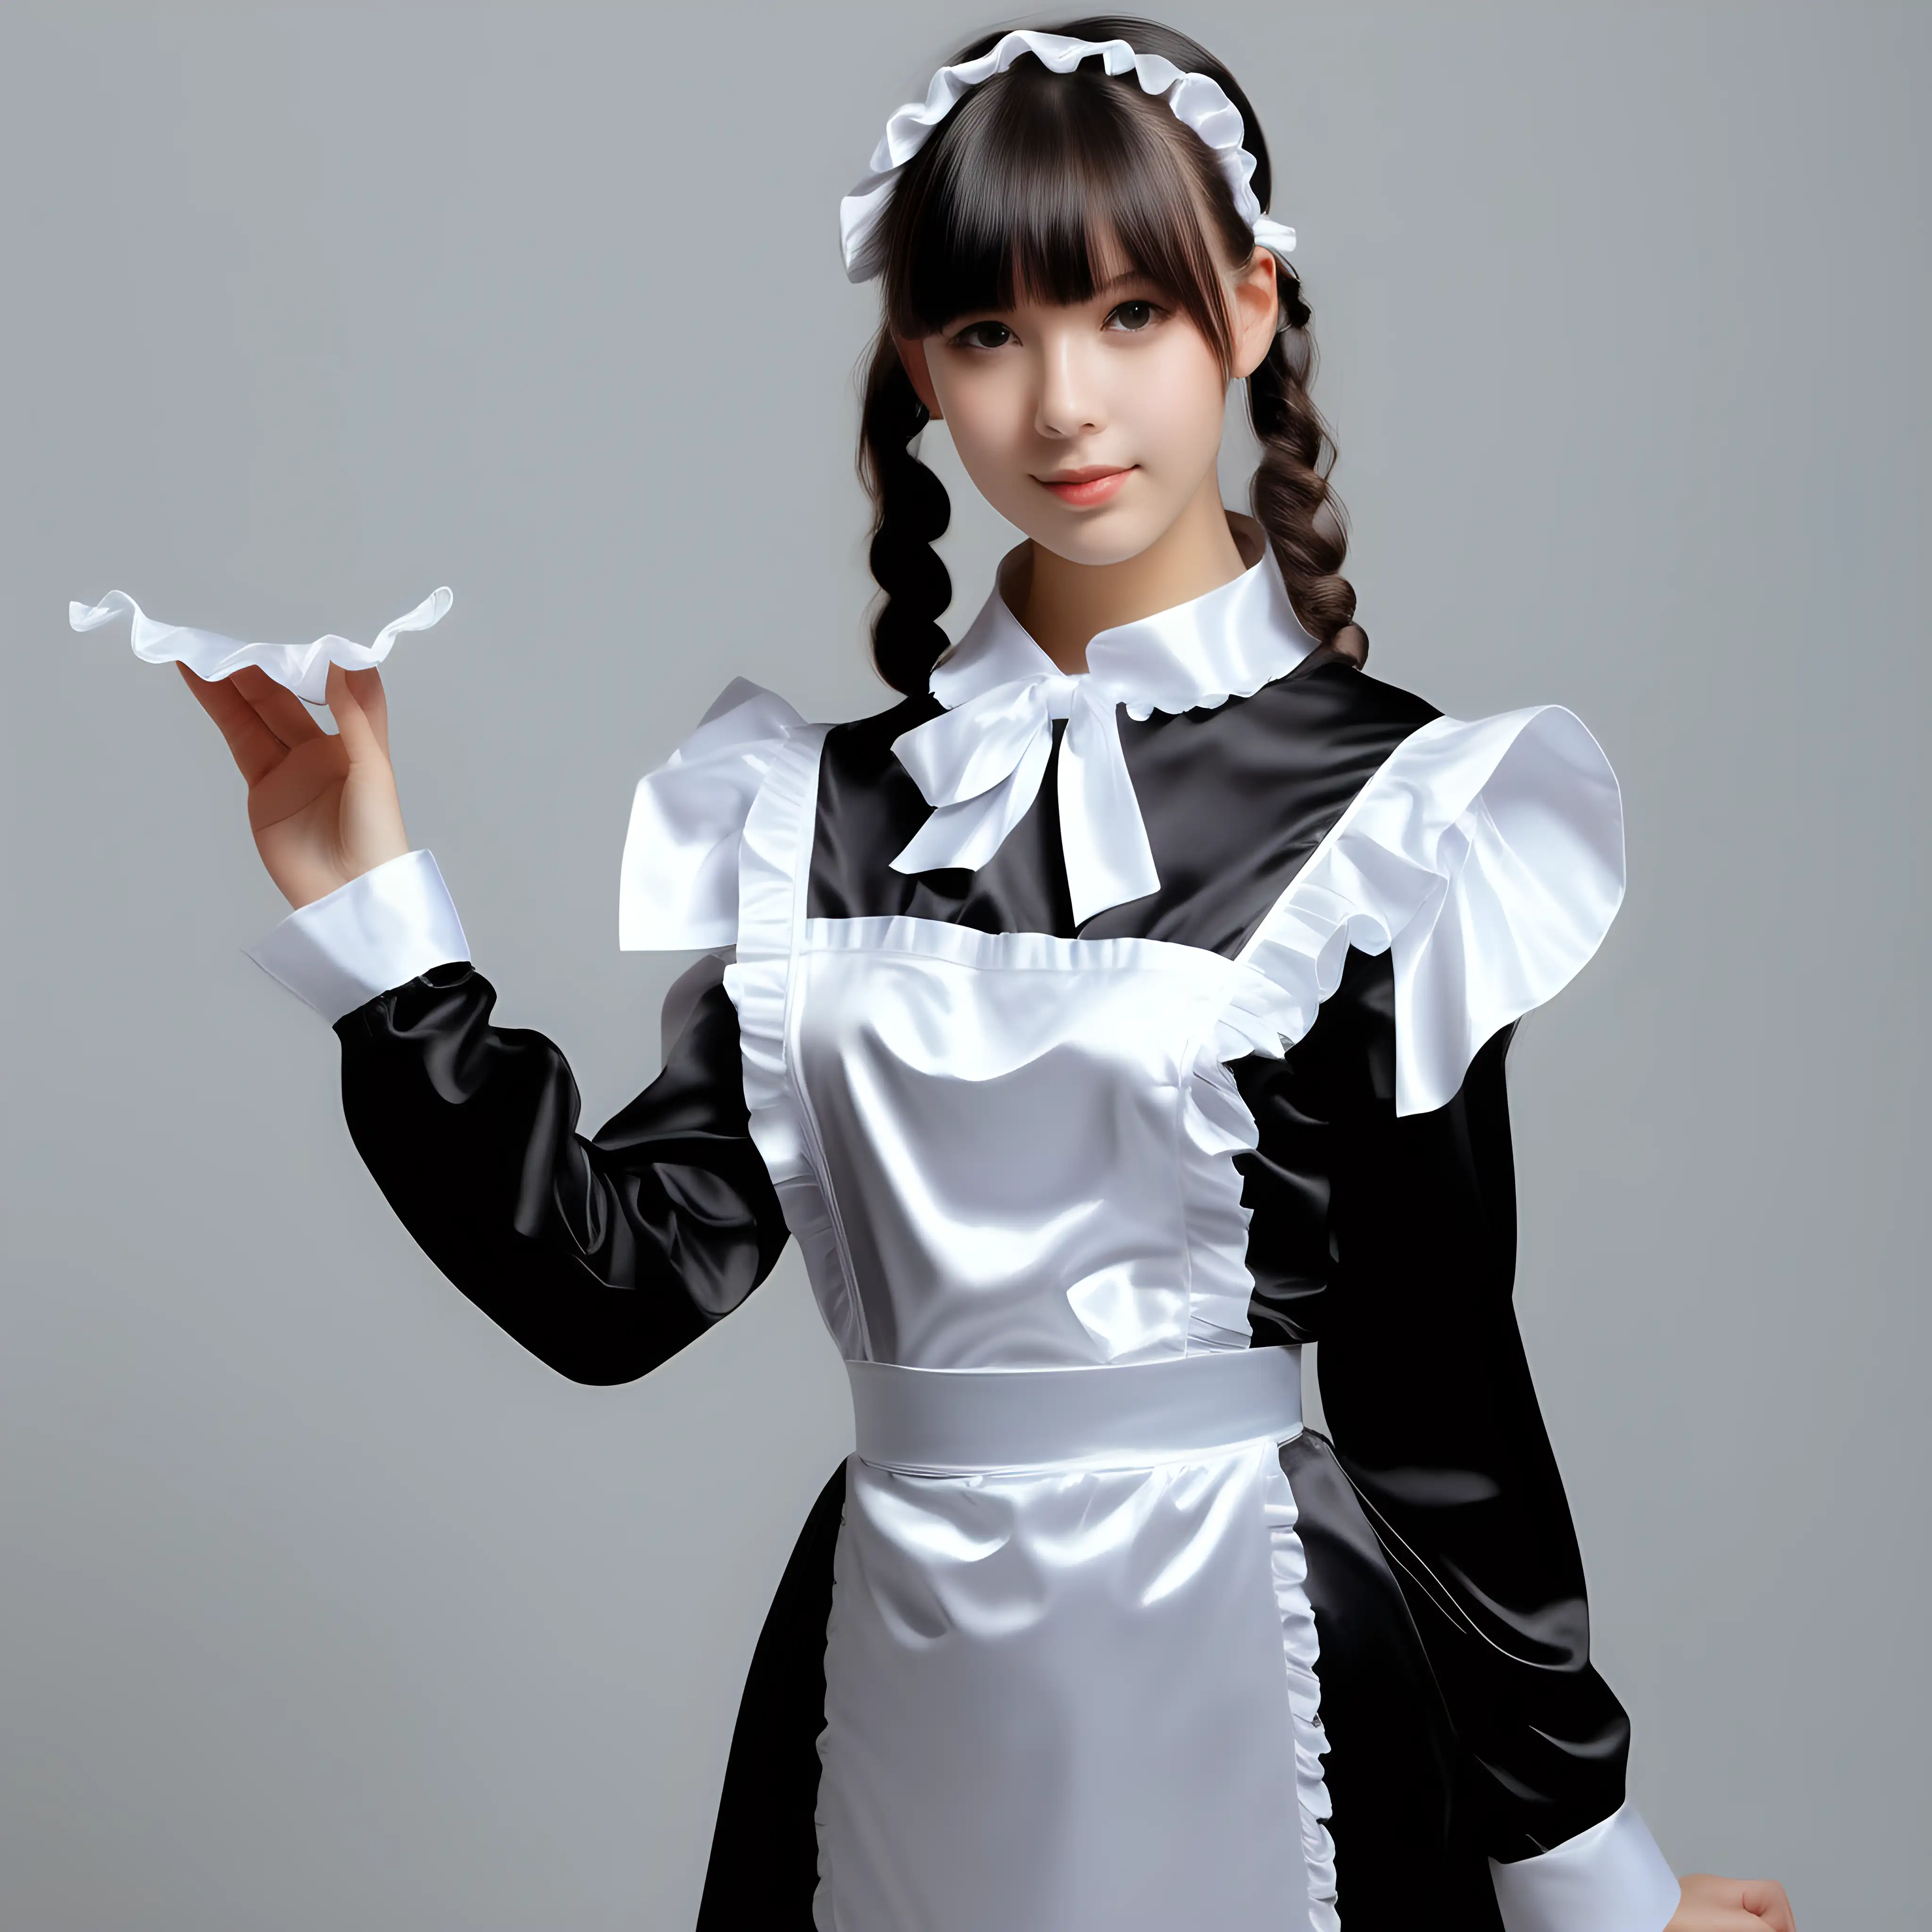 Girl in satin long maid uniforms